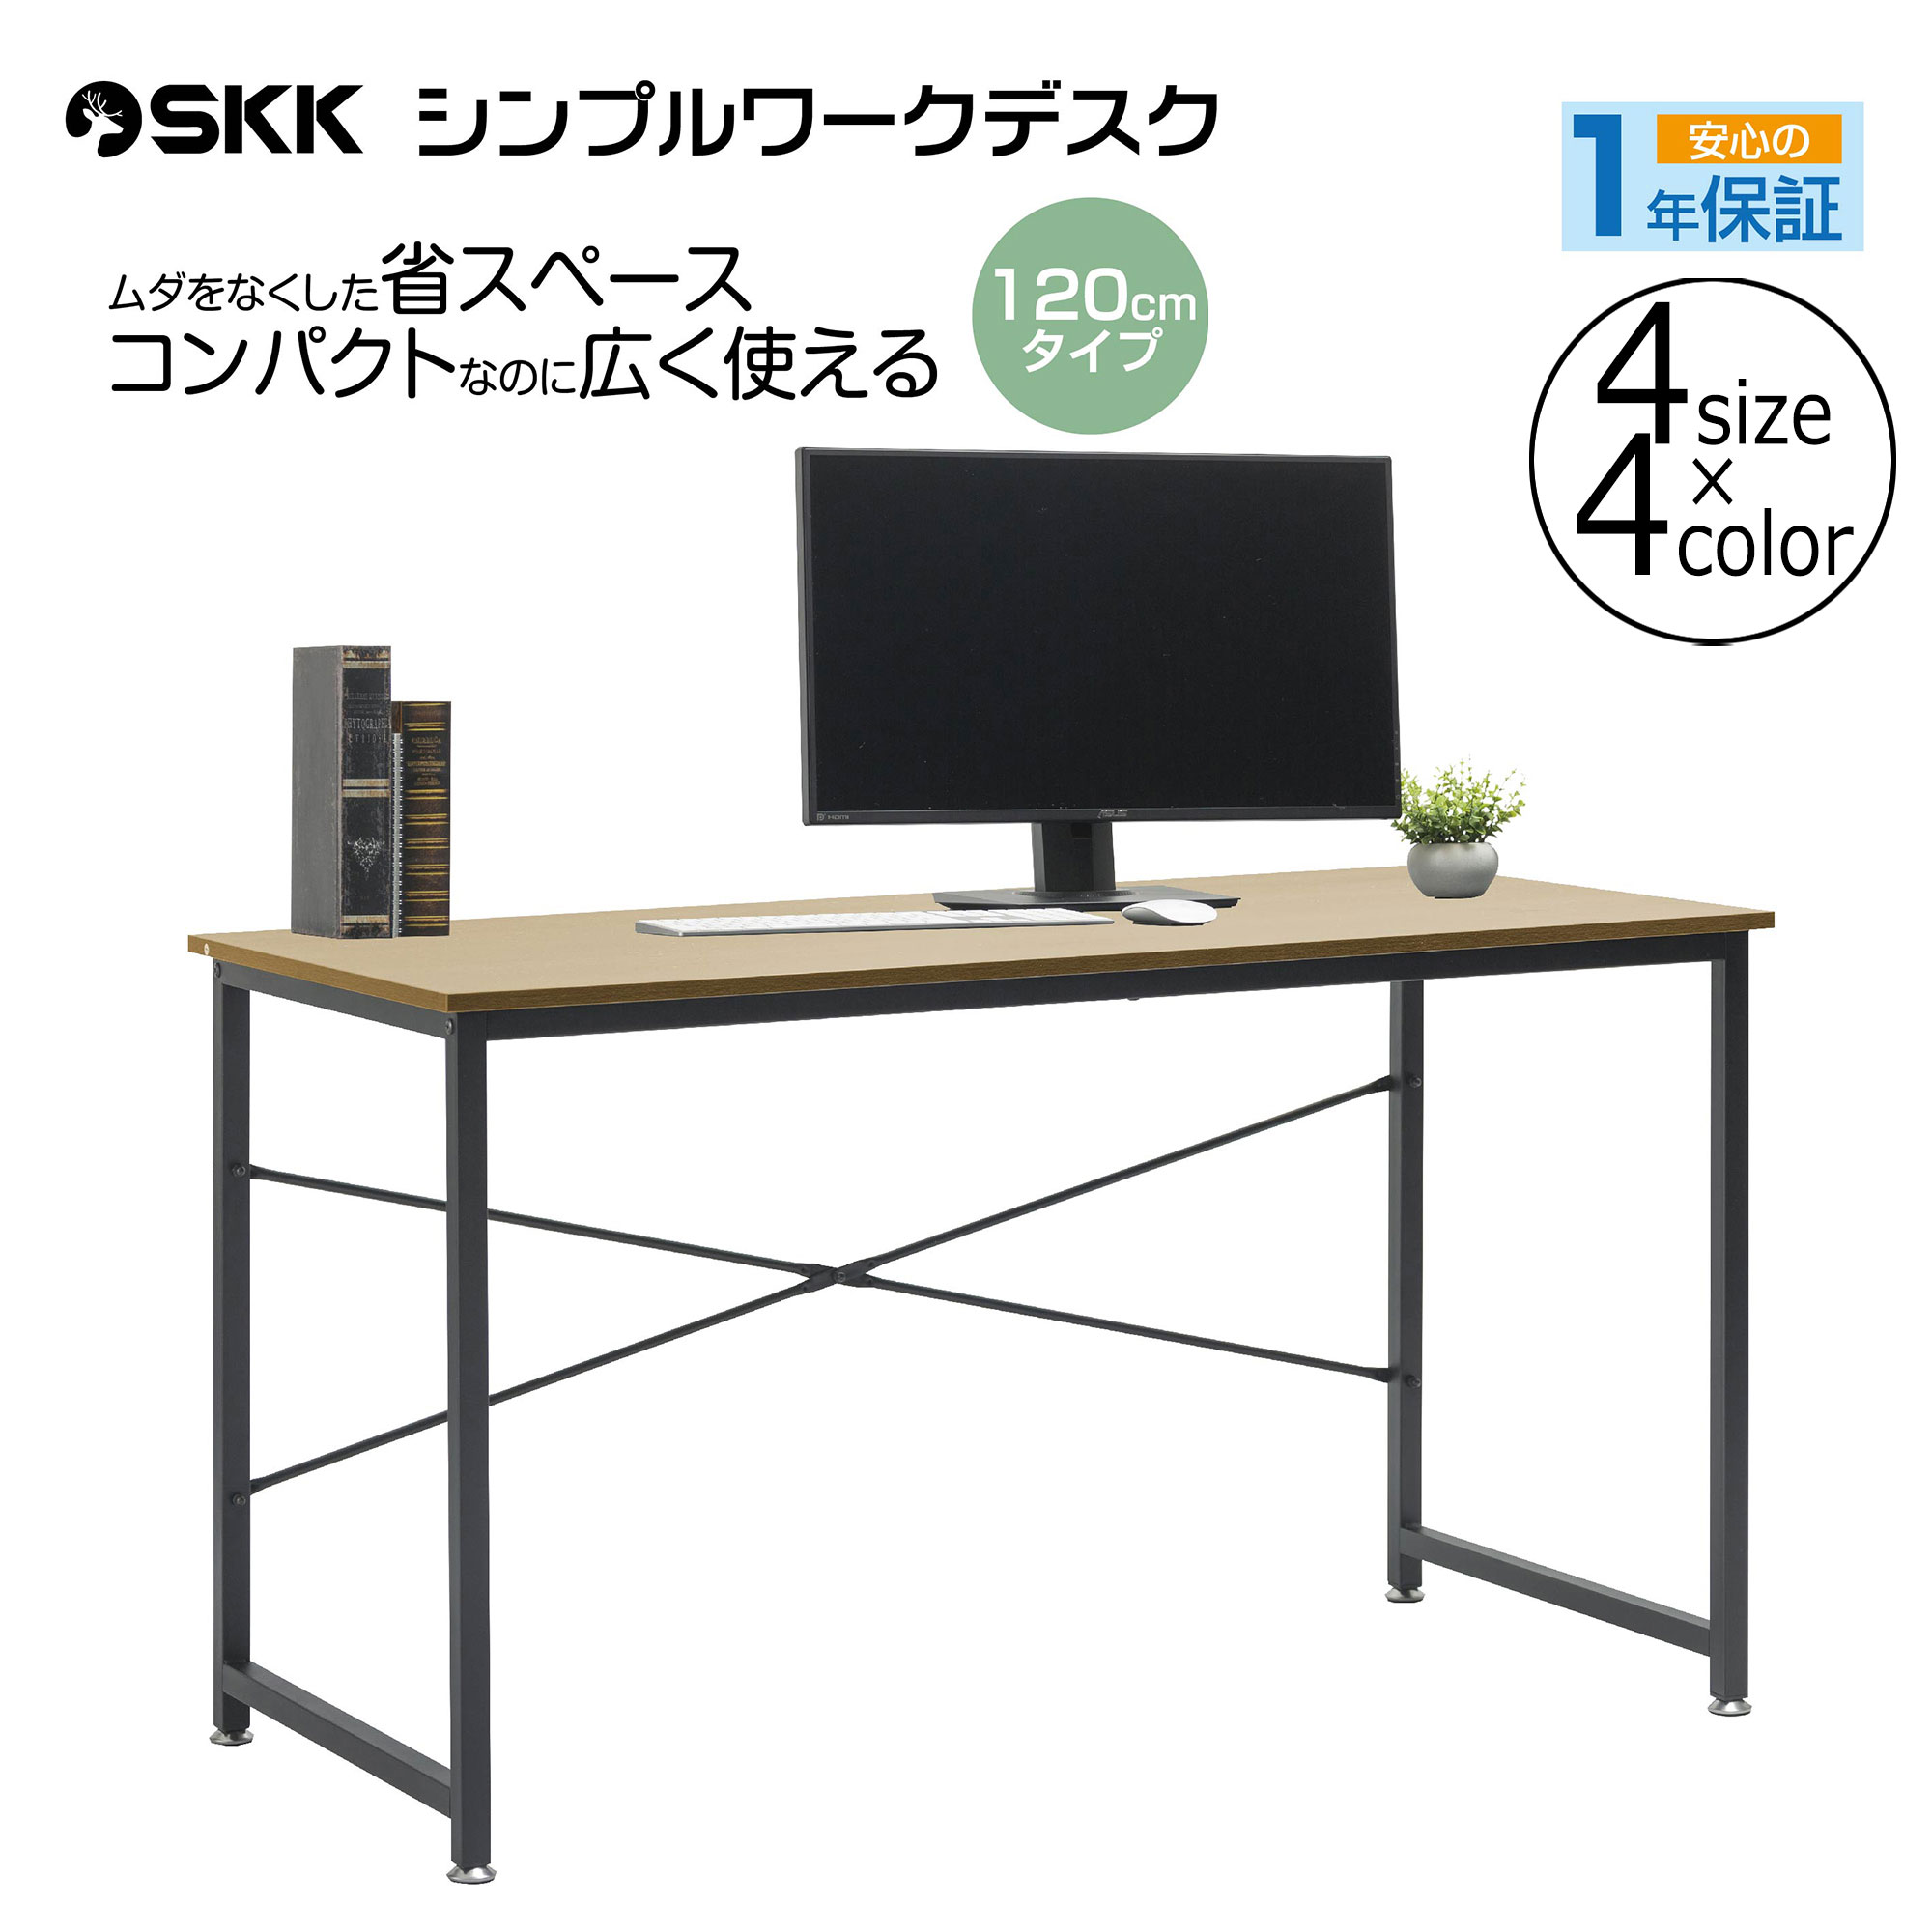 q860 SKK シンプルワークデスク 120cm パソコンデスク 作業台 - テーブル